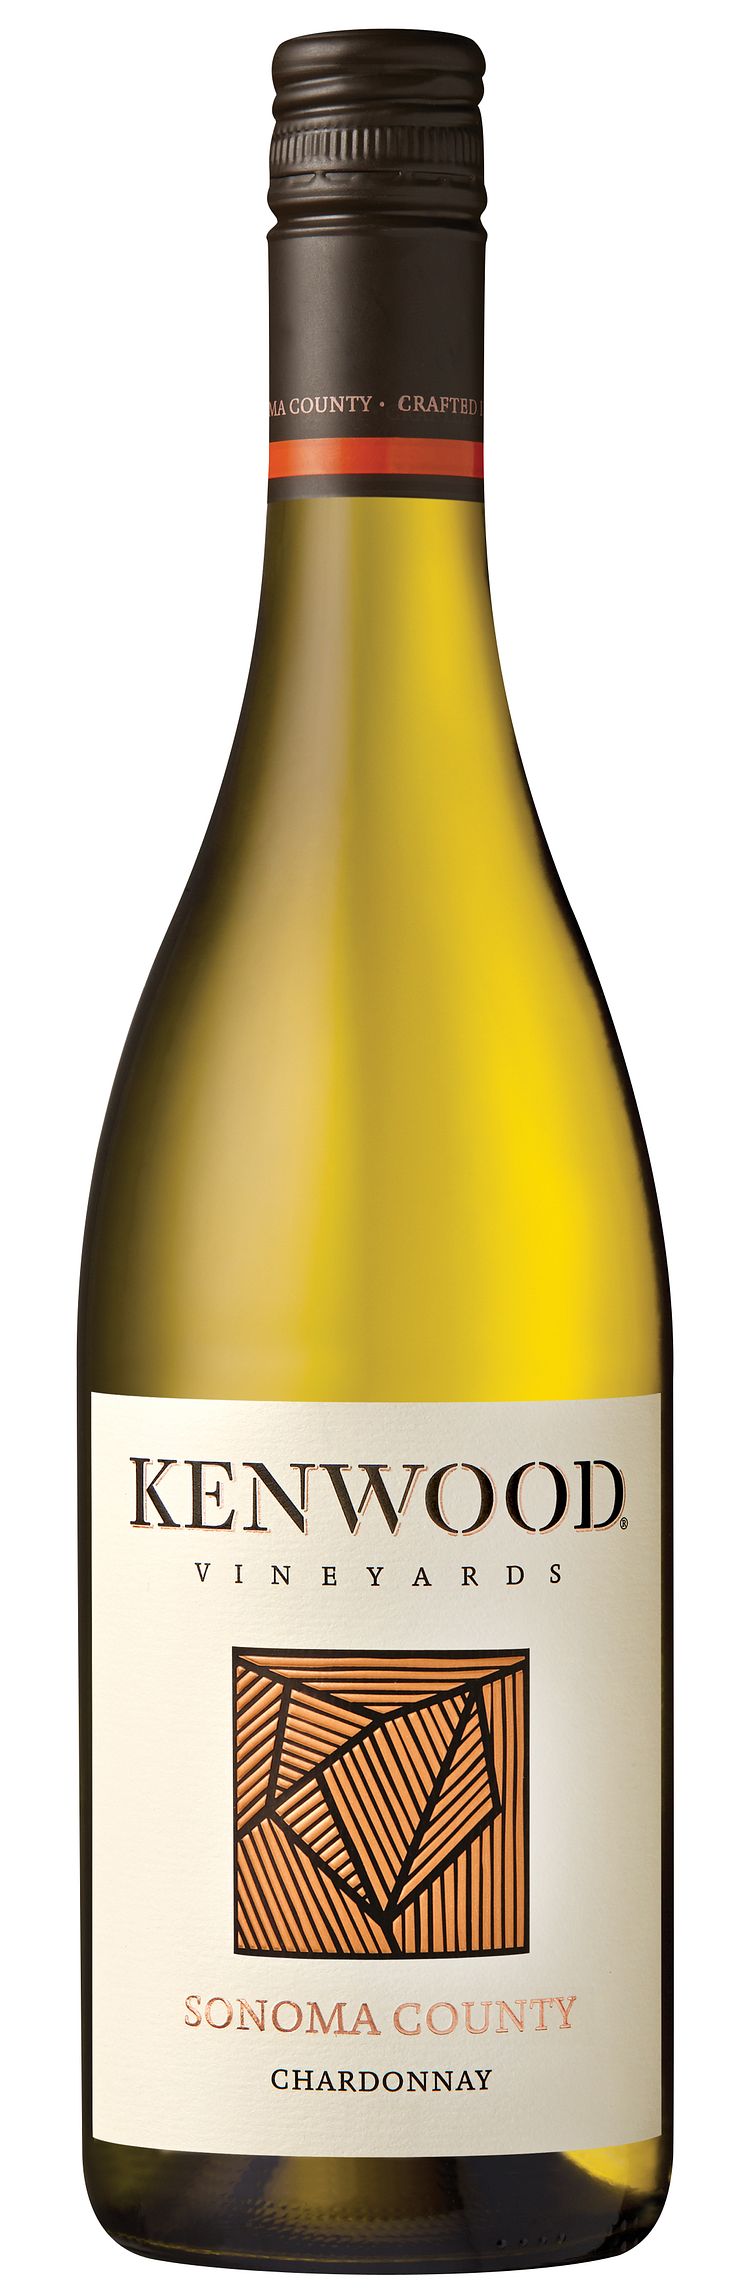 Kenwood Sonoma County Chardonnay